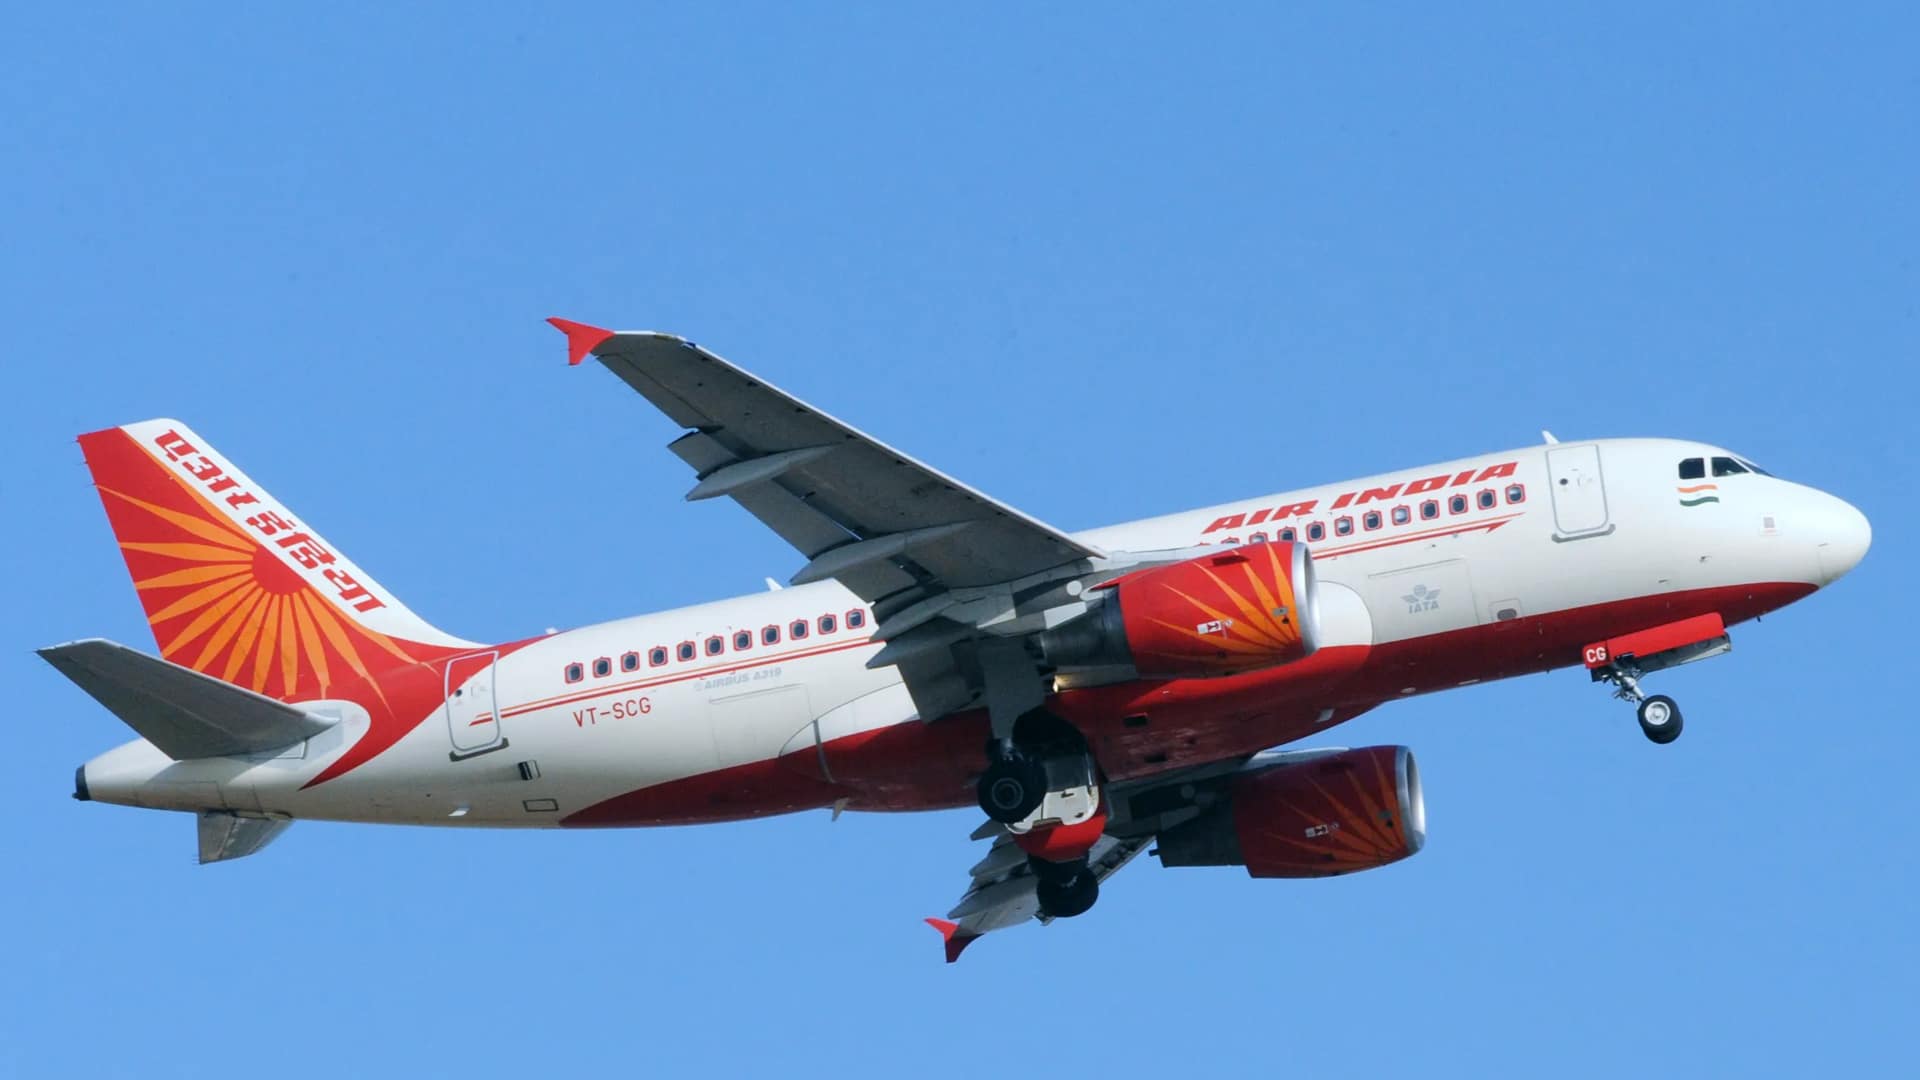 Air India says passenger behaved in 'repulsive manner' onboard Mumbai-Delhi flight on Jun 24